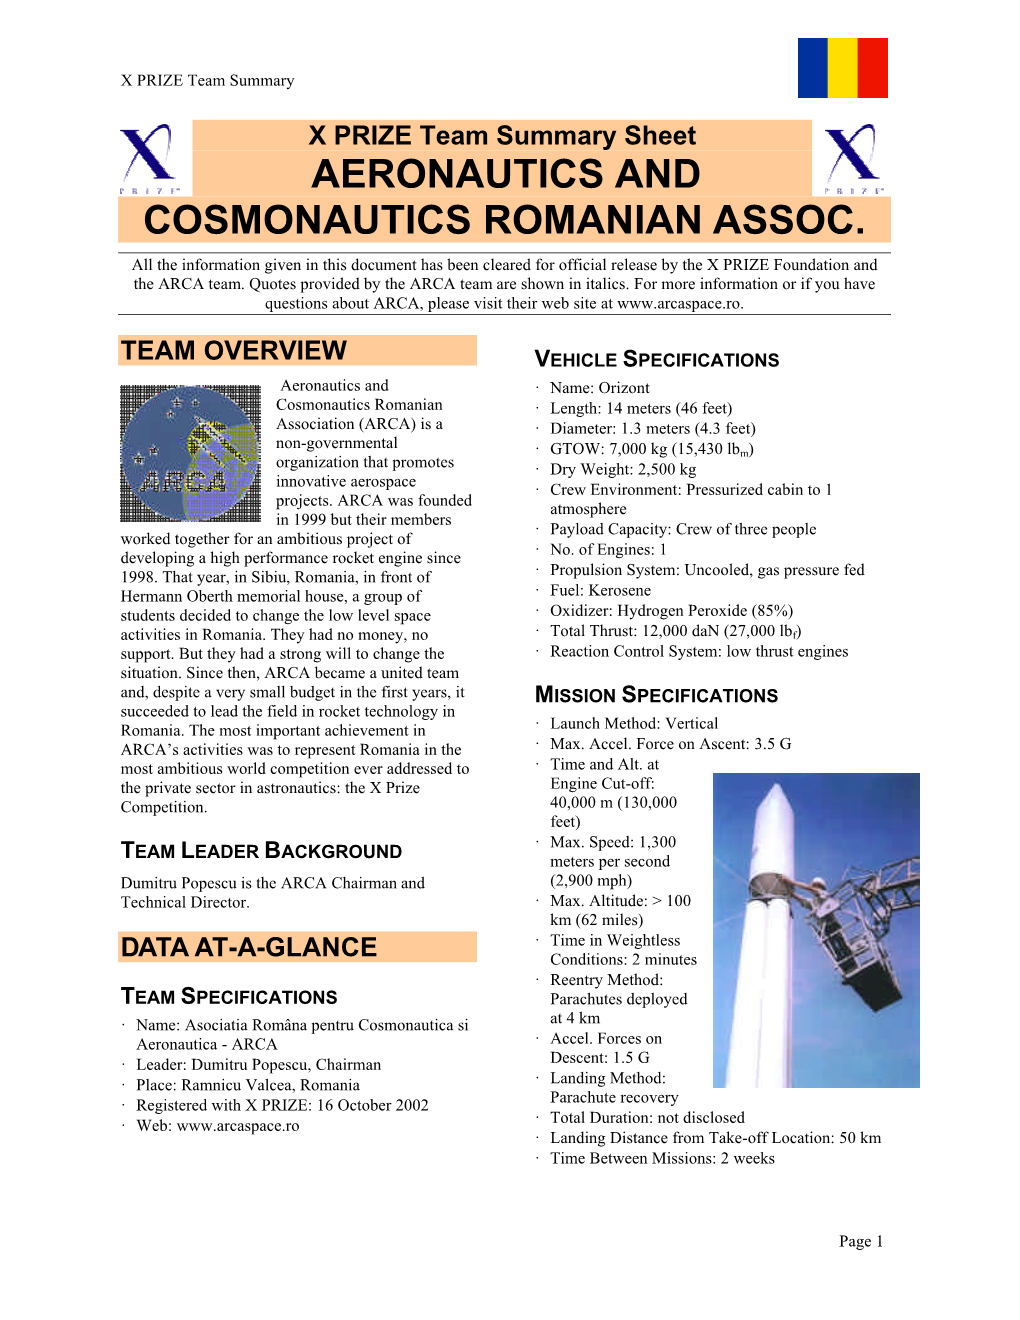 Aeronautics and Cosmonautics Romanian Assoc